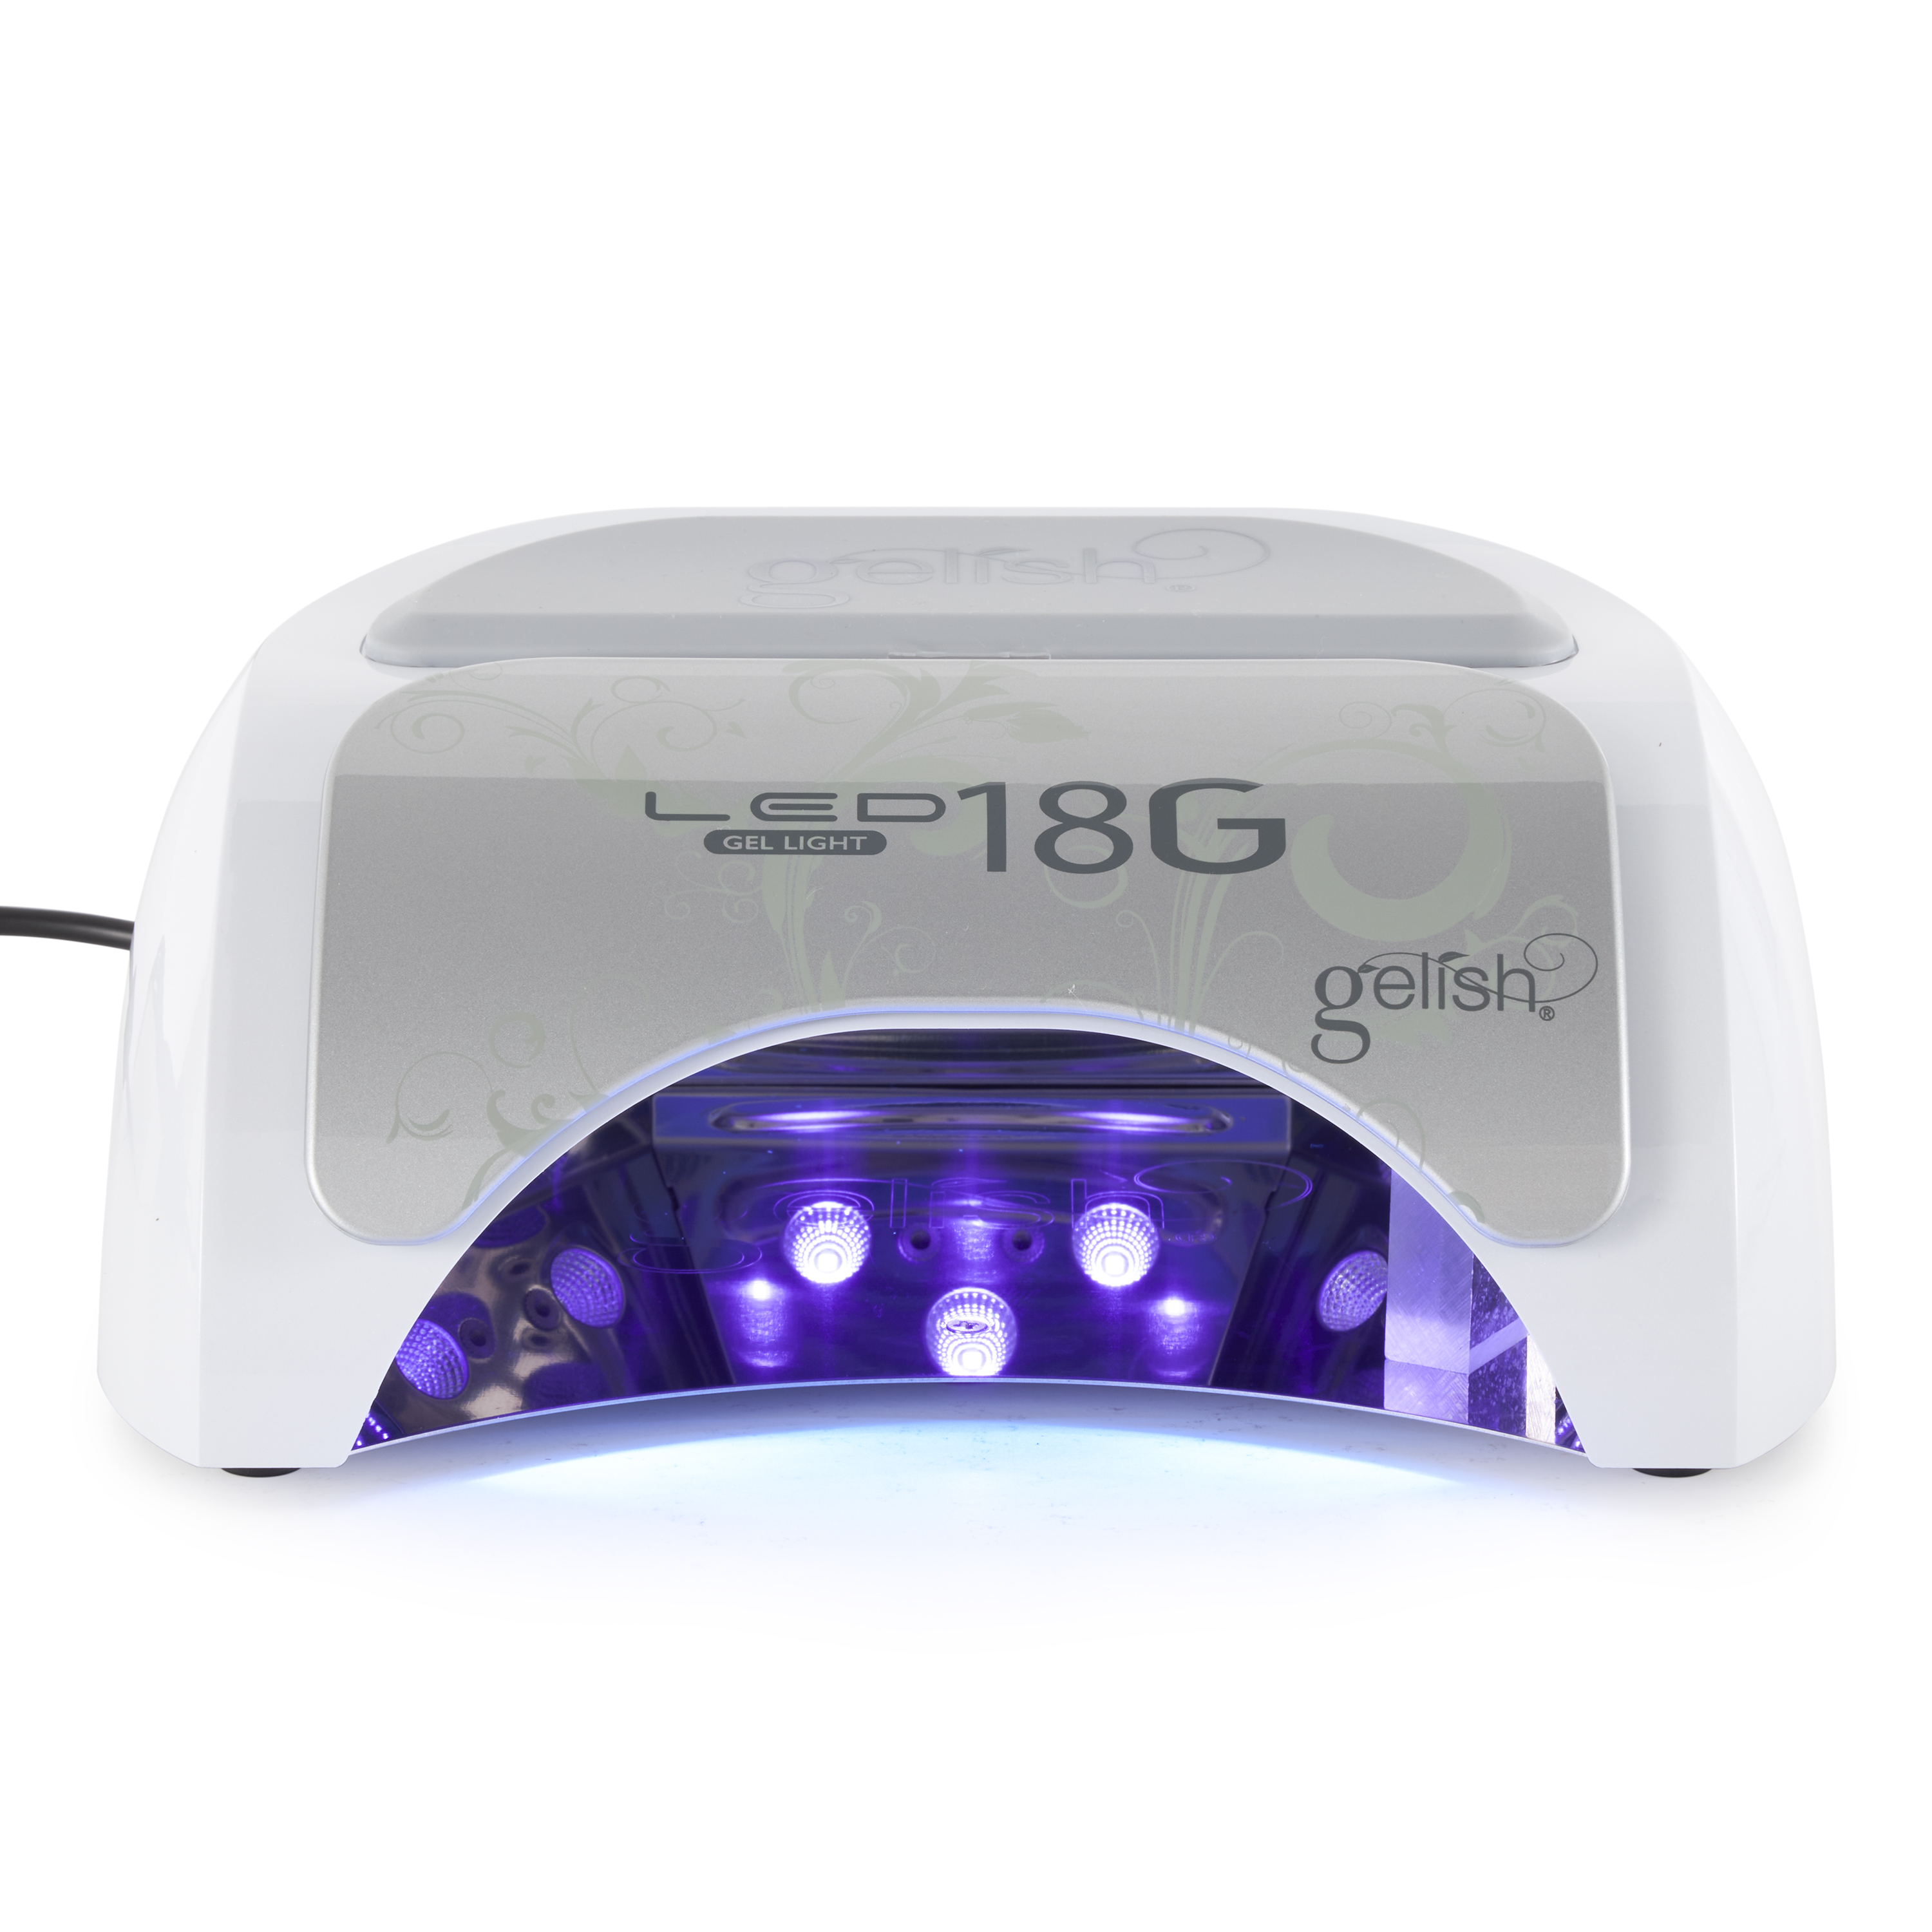 Gelish 18G Professional Salon 36W Gel Nail Polish Curing LED Light Lamp  Dryer with Timer